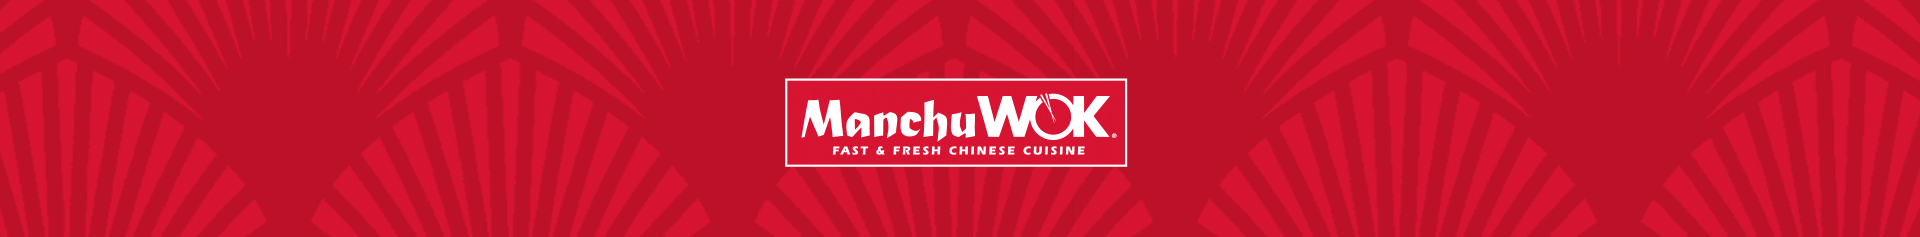 Manchu Wok - Chinese Cuisine